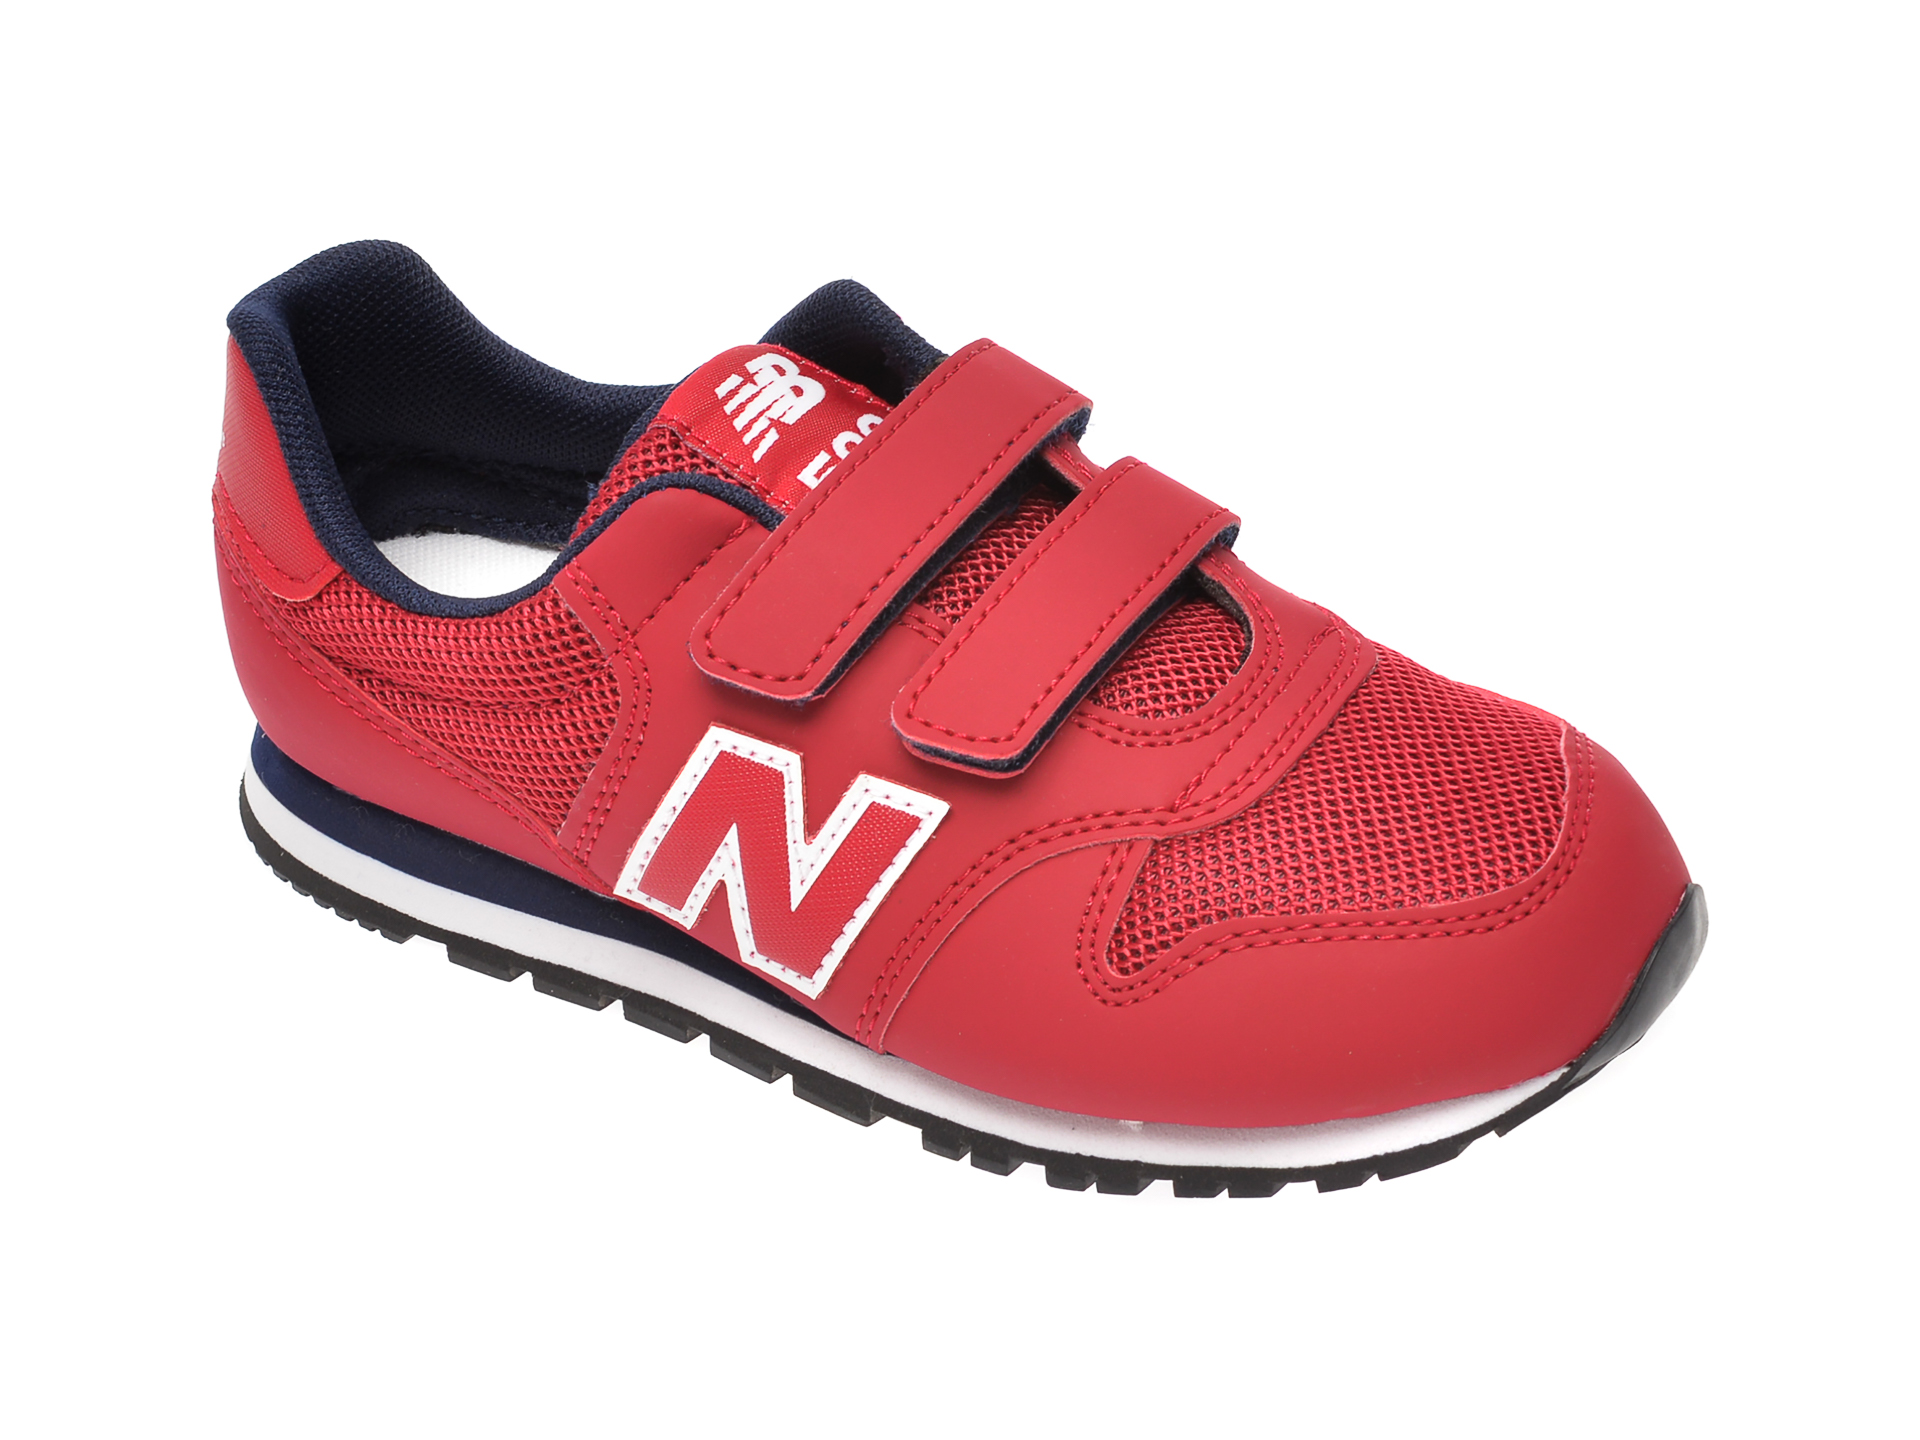 Pantofi sport NEW BALANCE rosii, YV500, din piele ecologica si material textil